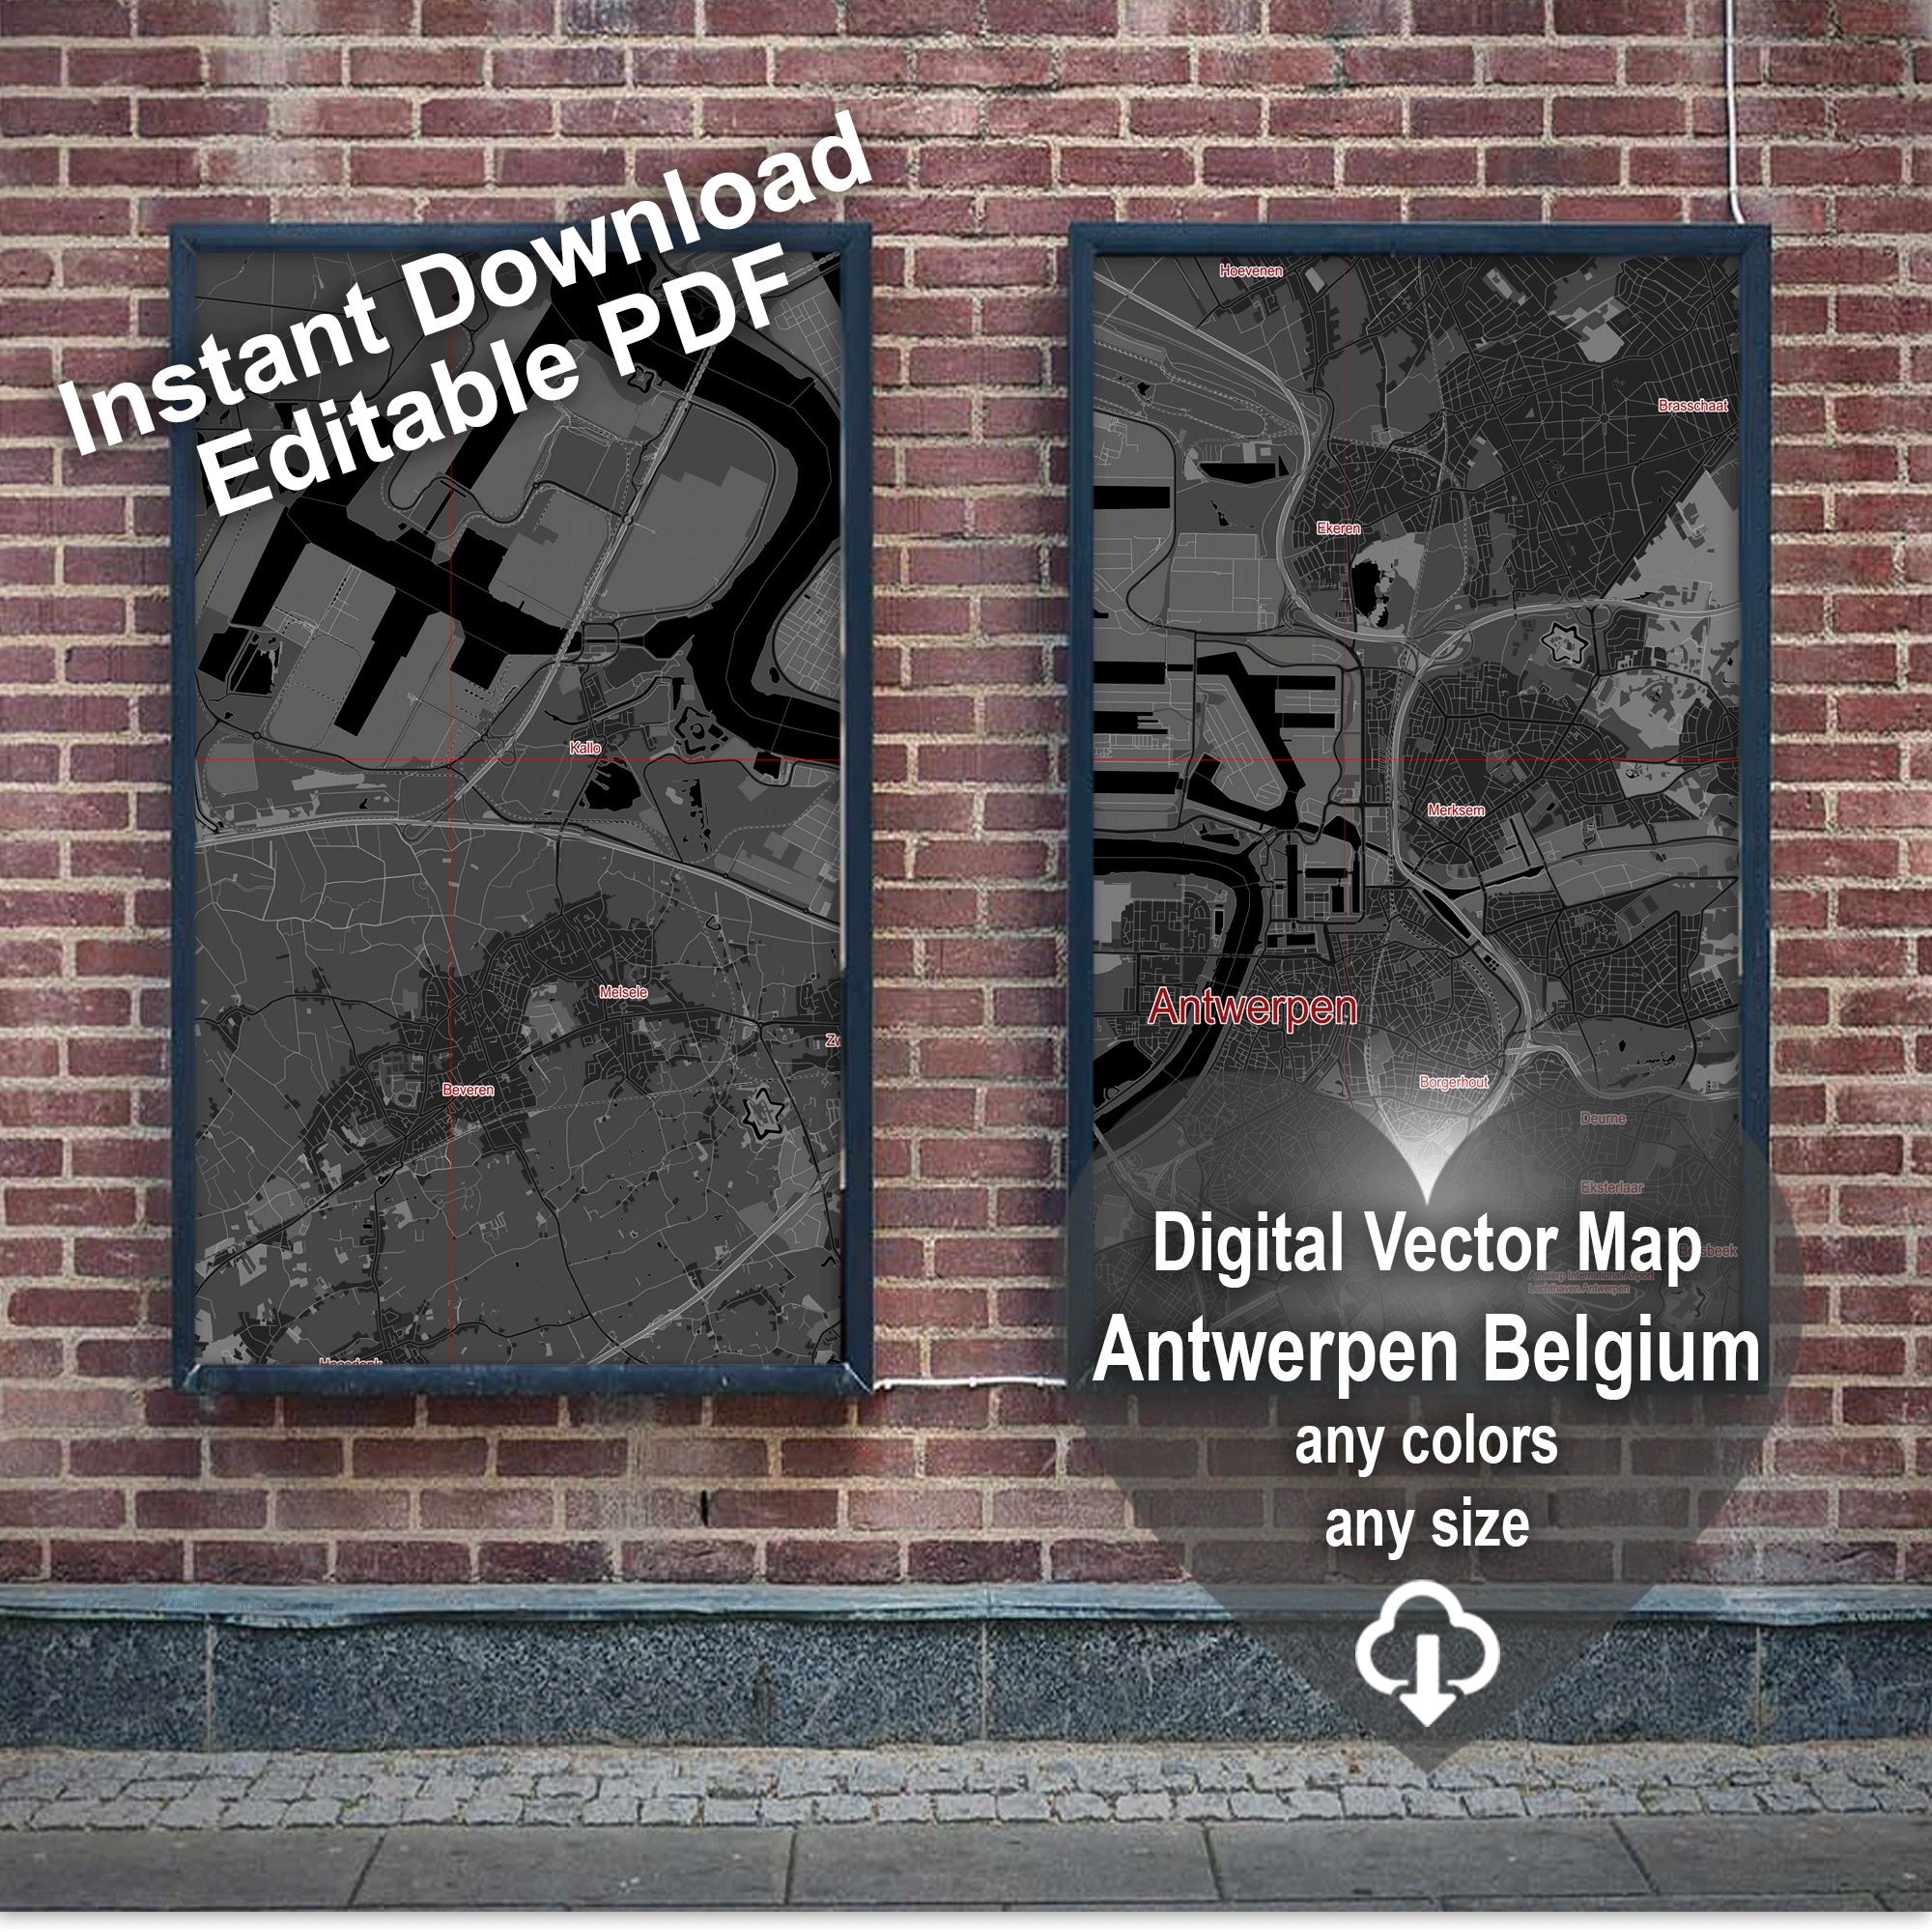 Antwerp Belgium Map Vector City Plan Low Detailed (simple black) Street Map editable Adobe Illustrator in layers